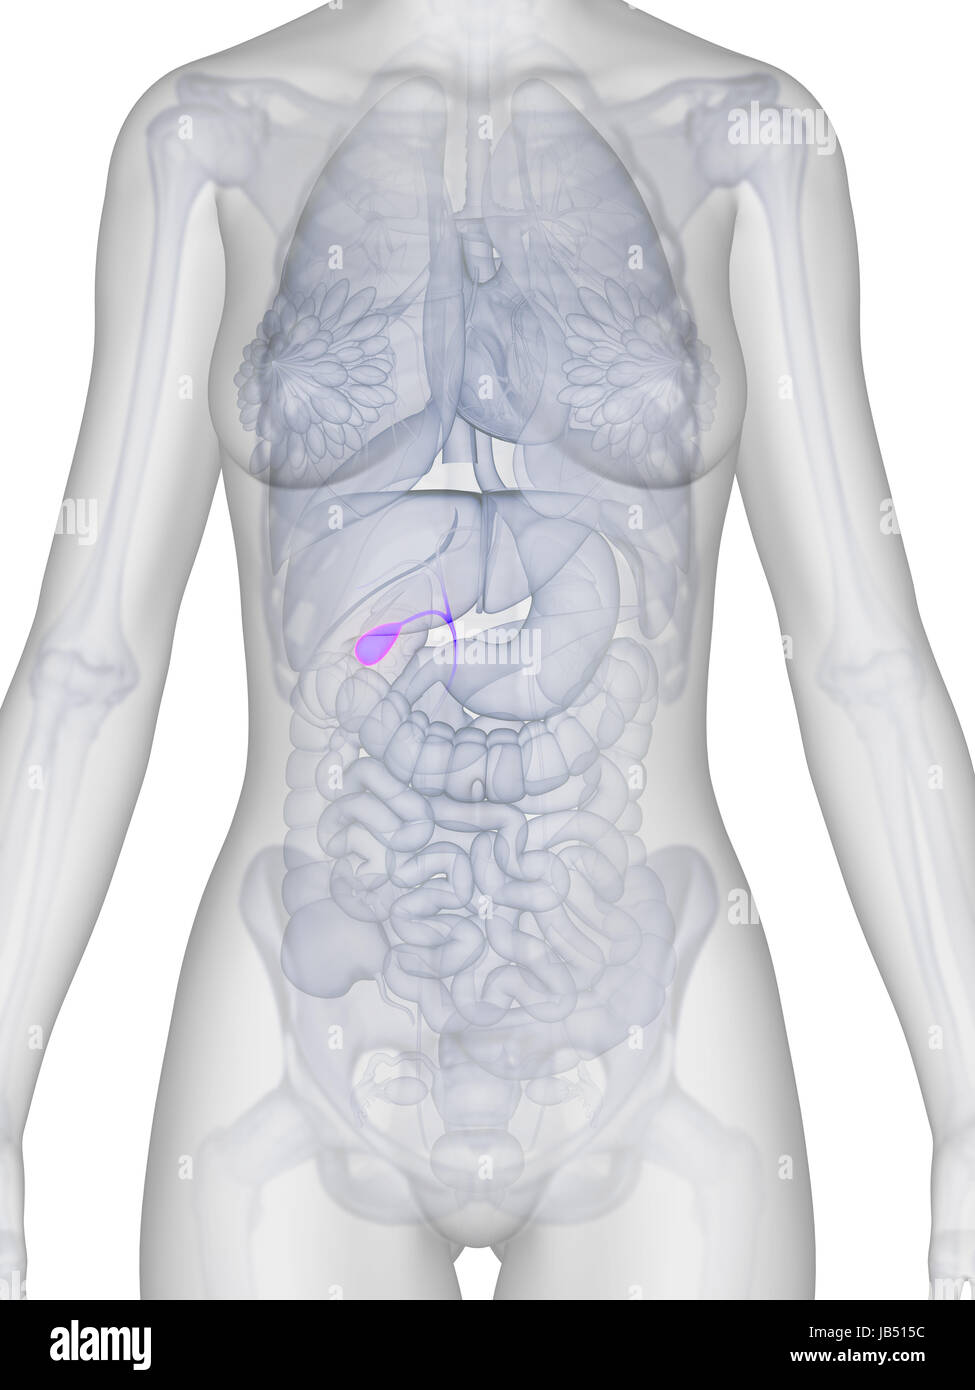 3d rendered illustration of the female anatomy - gallbladder Stock Photo